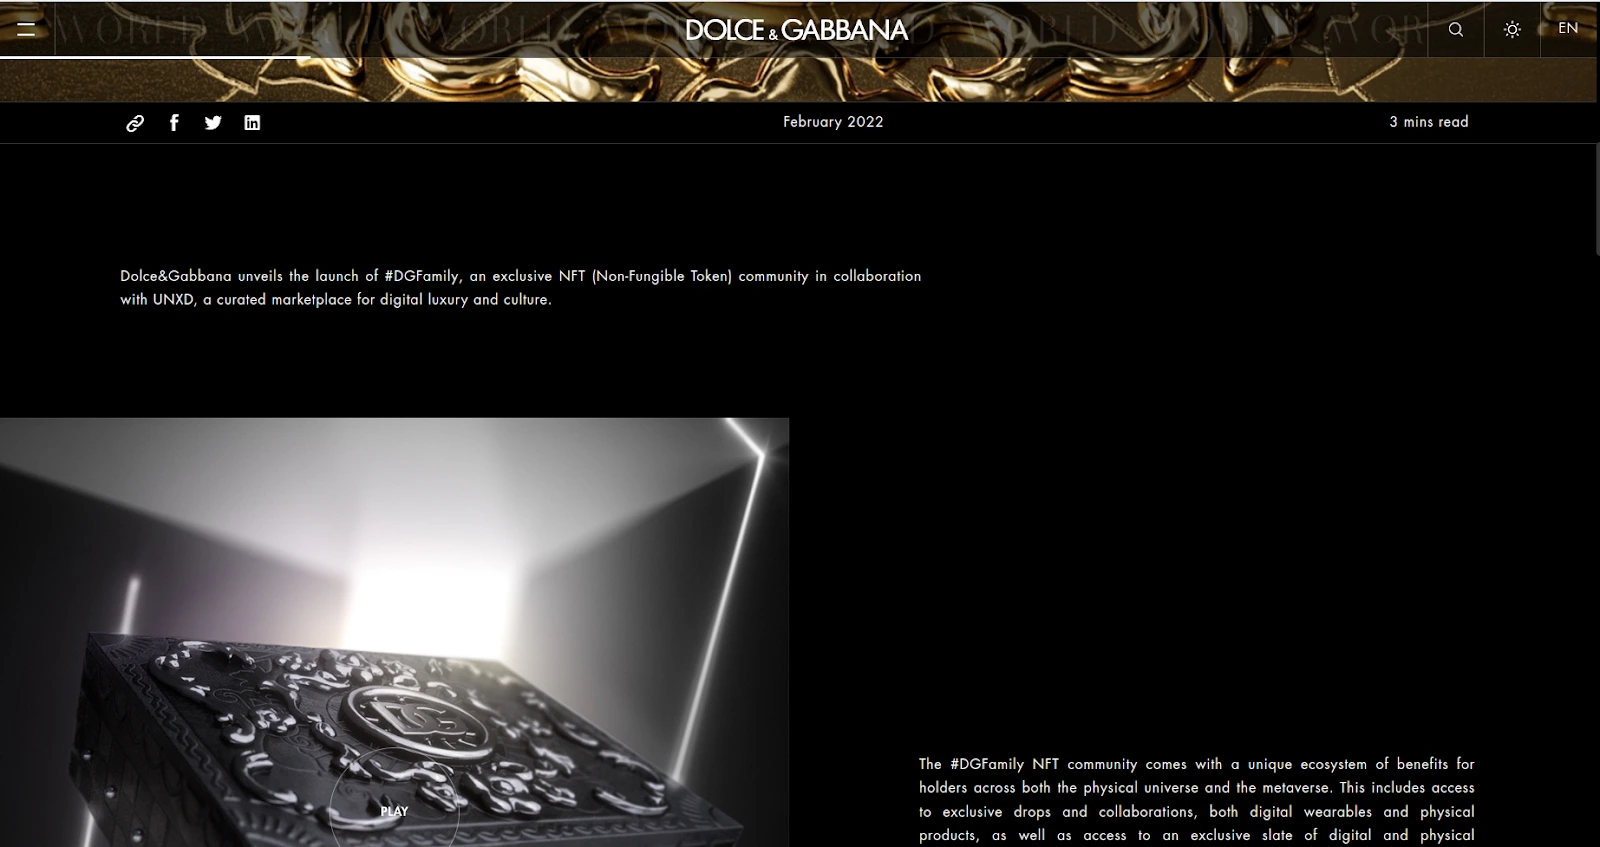 Dolce & Gabbana announcing #DGFamily NFT community